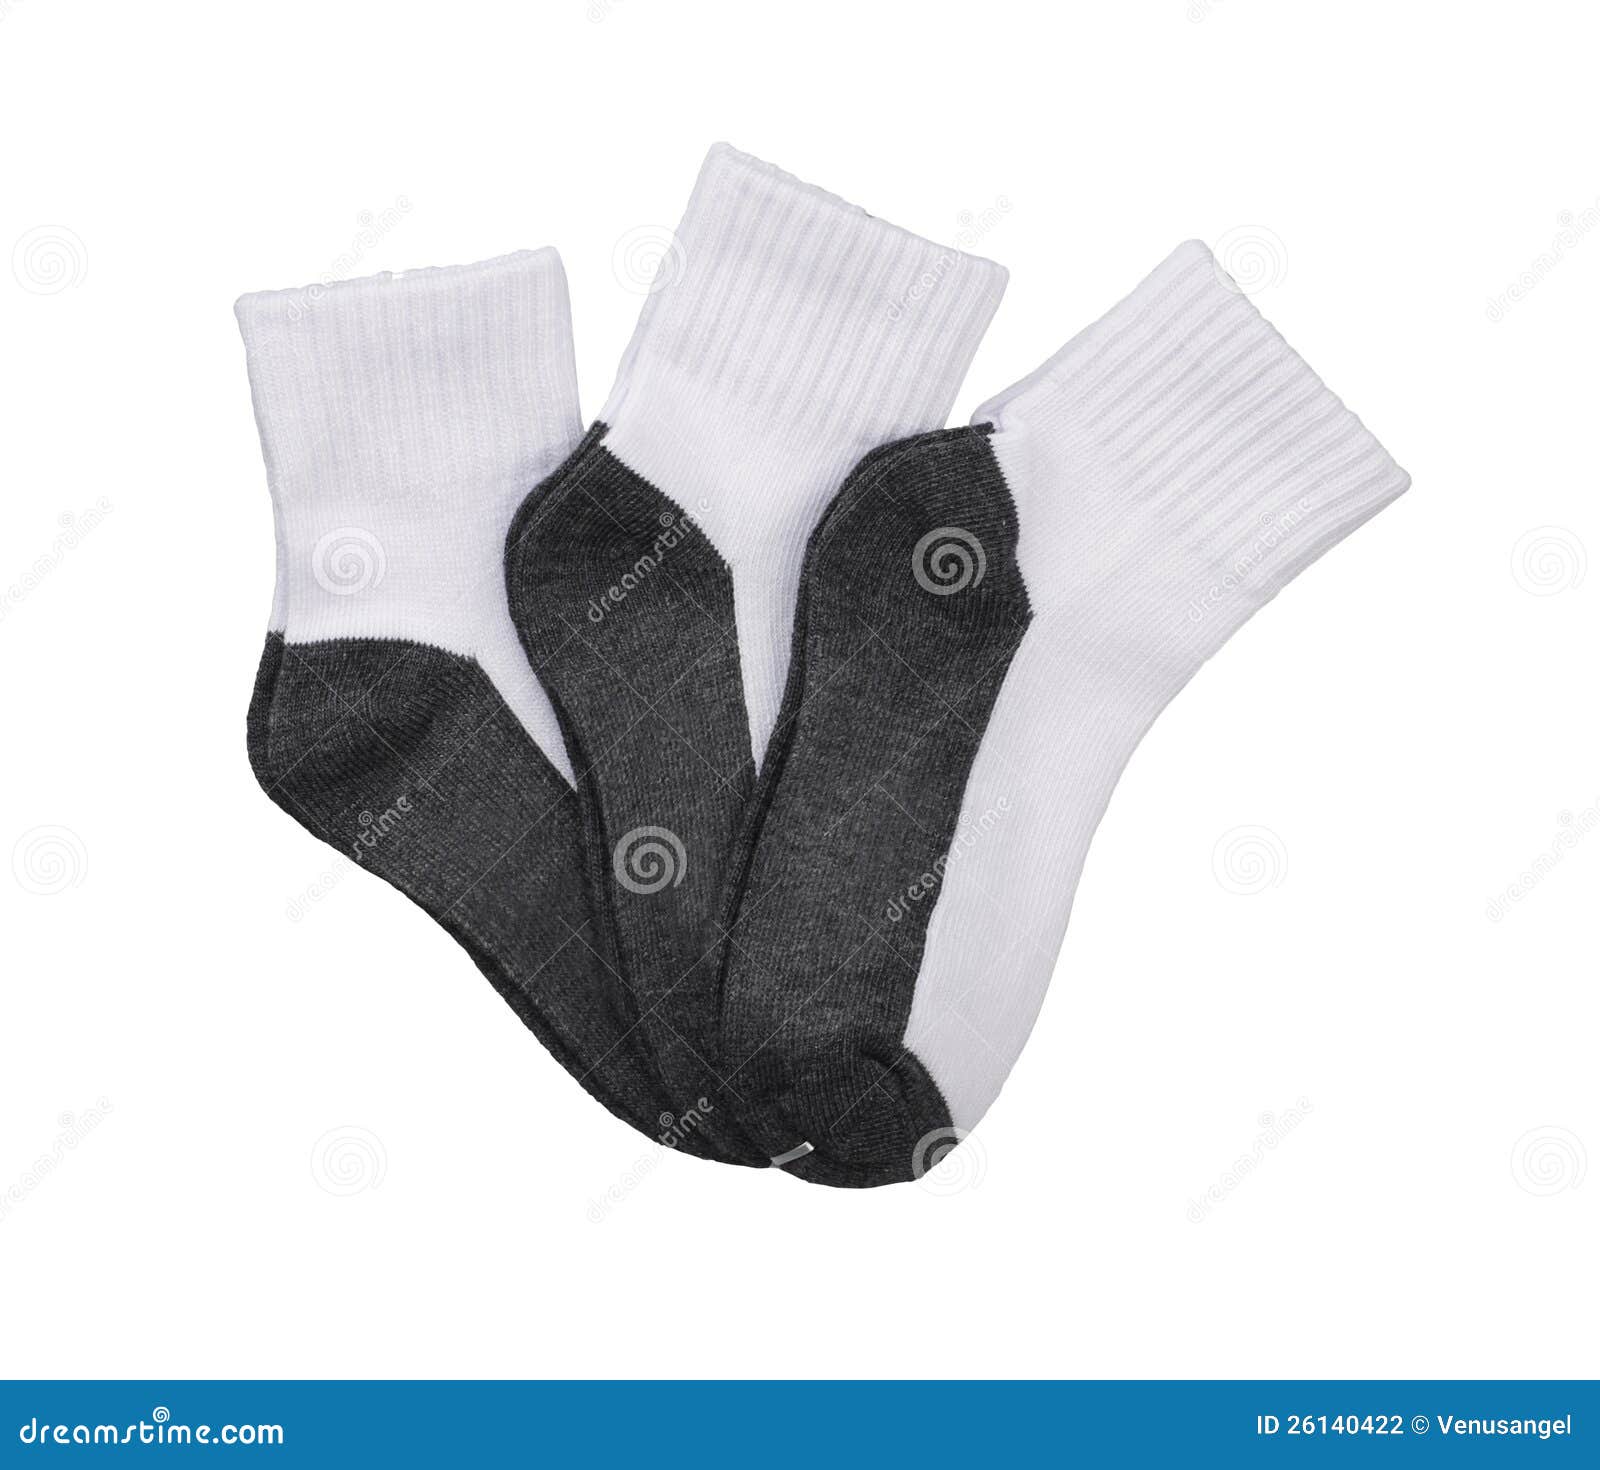 Student socks stock photo. Image of cloth, pair, shoe - 26140422